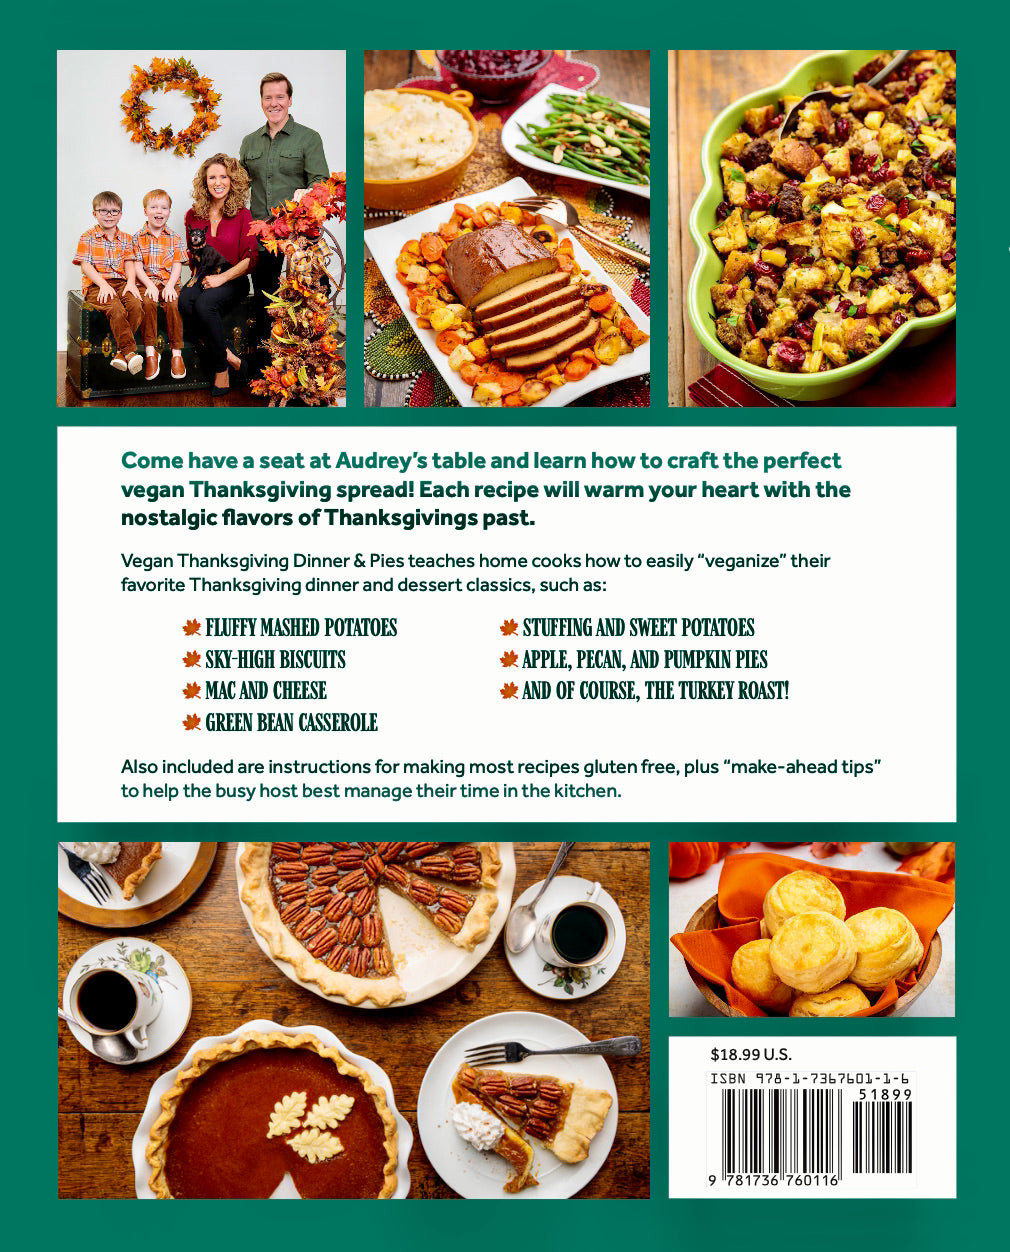 Vegan Thanksgiving Dinner & Pies; All of your favorite Thanksgiving dinner and dessert classics made vegan! (Hardcover)